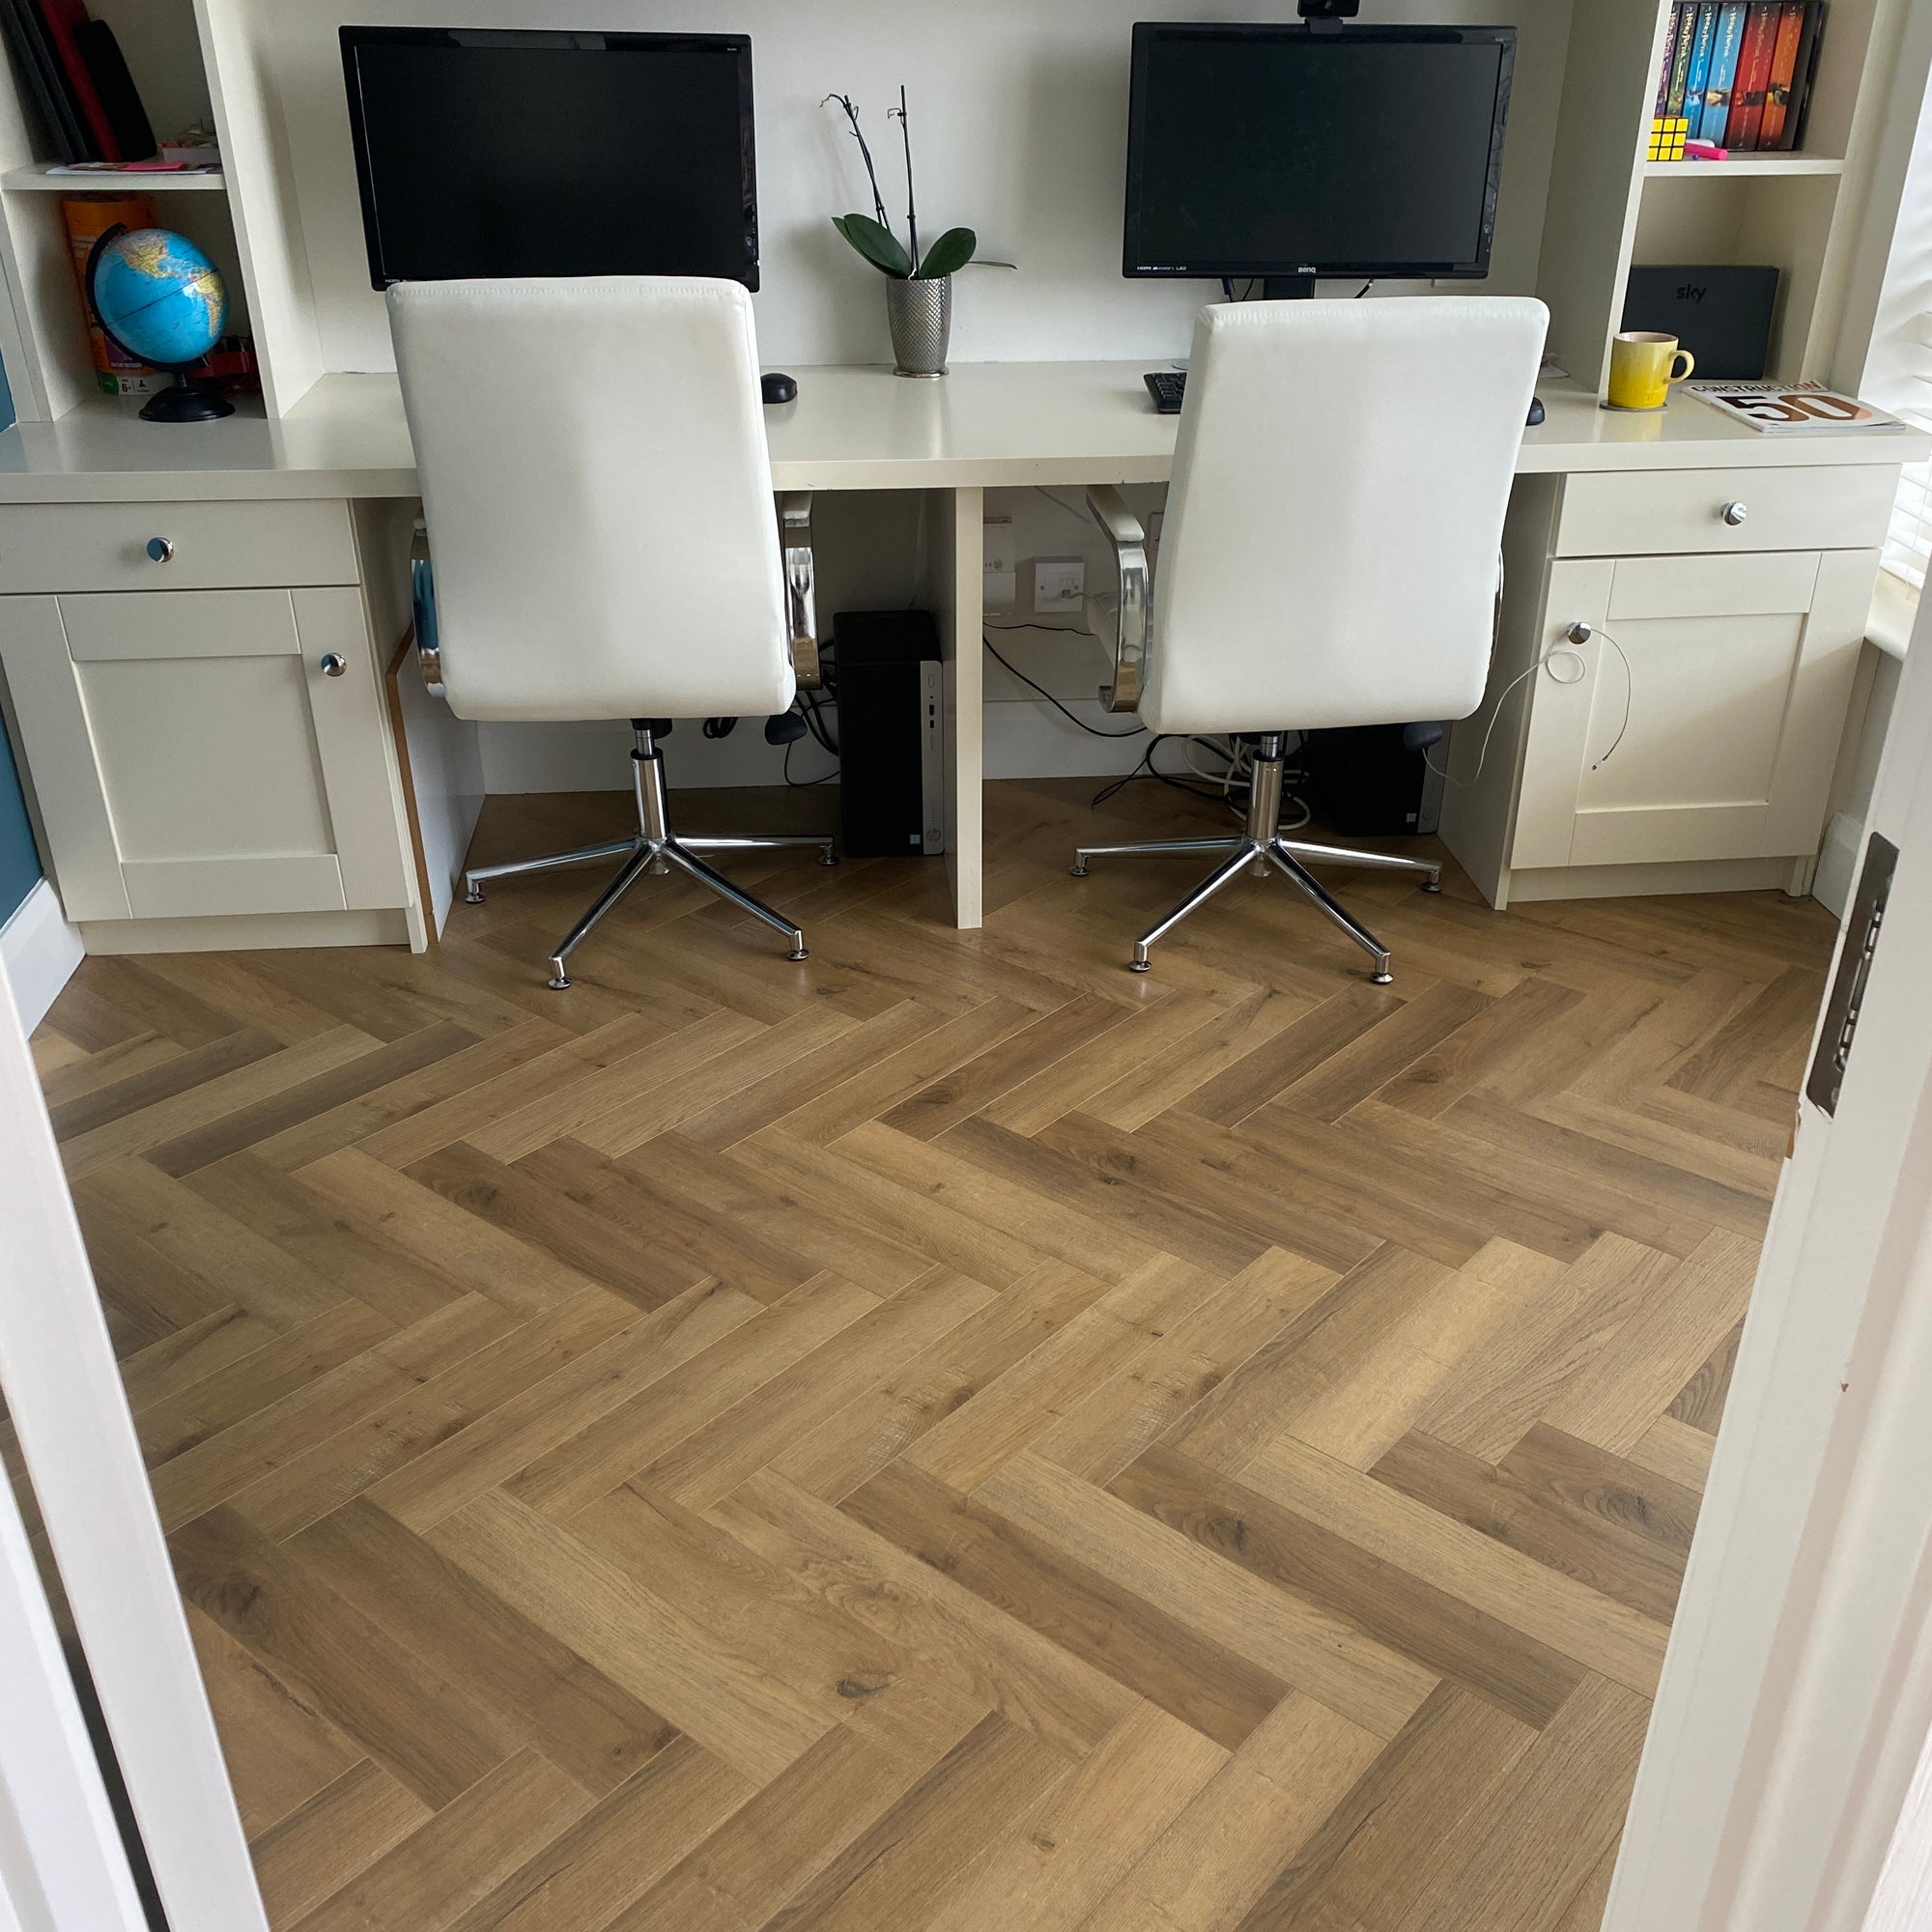 Laminate Herringbone Floor Dark Natural Oak Flooring 12mm Home Interior Design Living Room